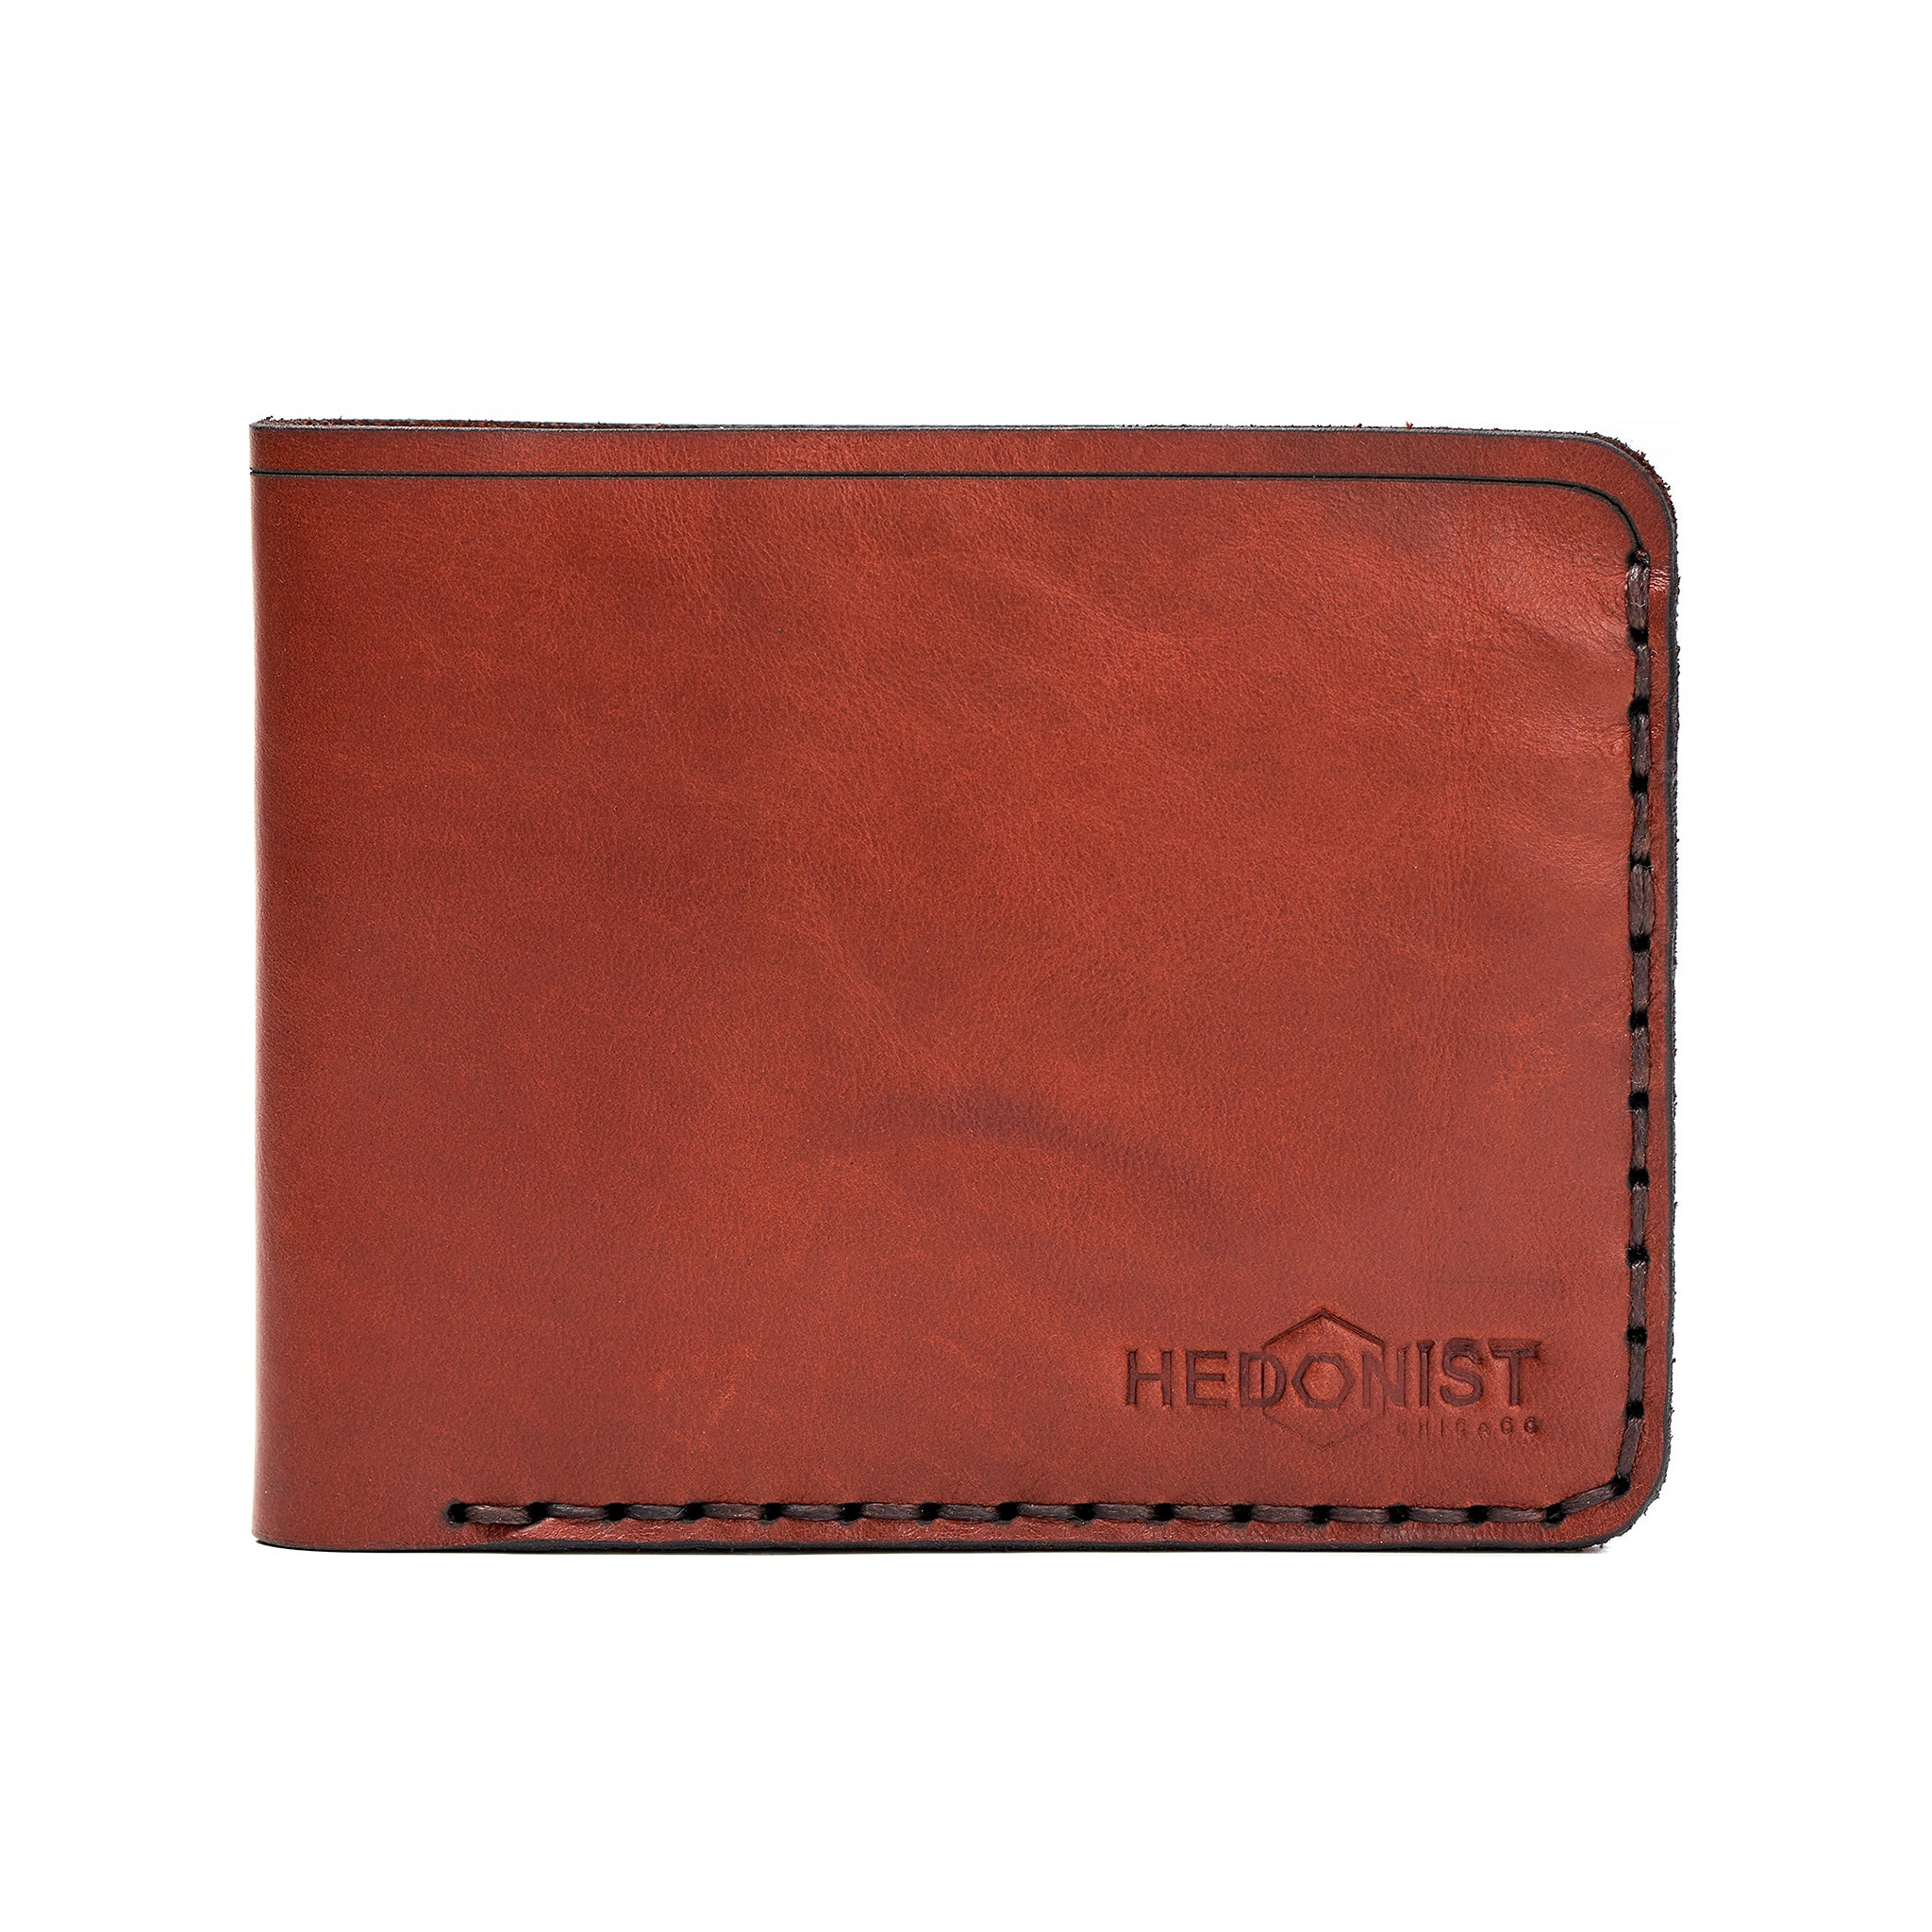 Handmade Men's Wallet 6 Card Slots Red Brick 31707924889751